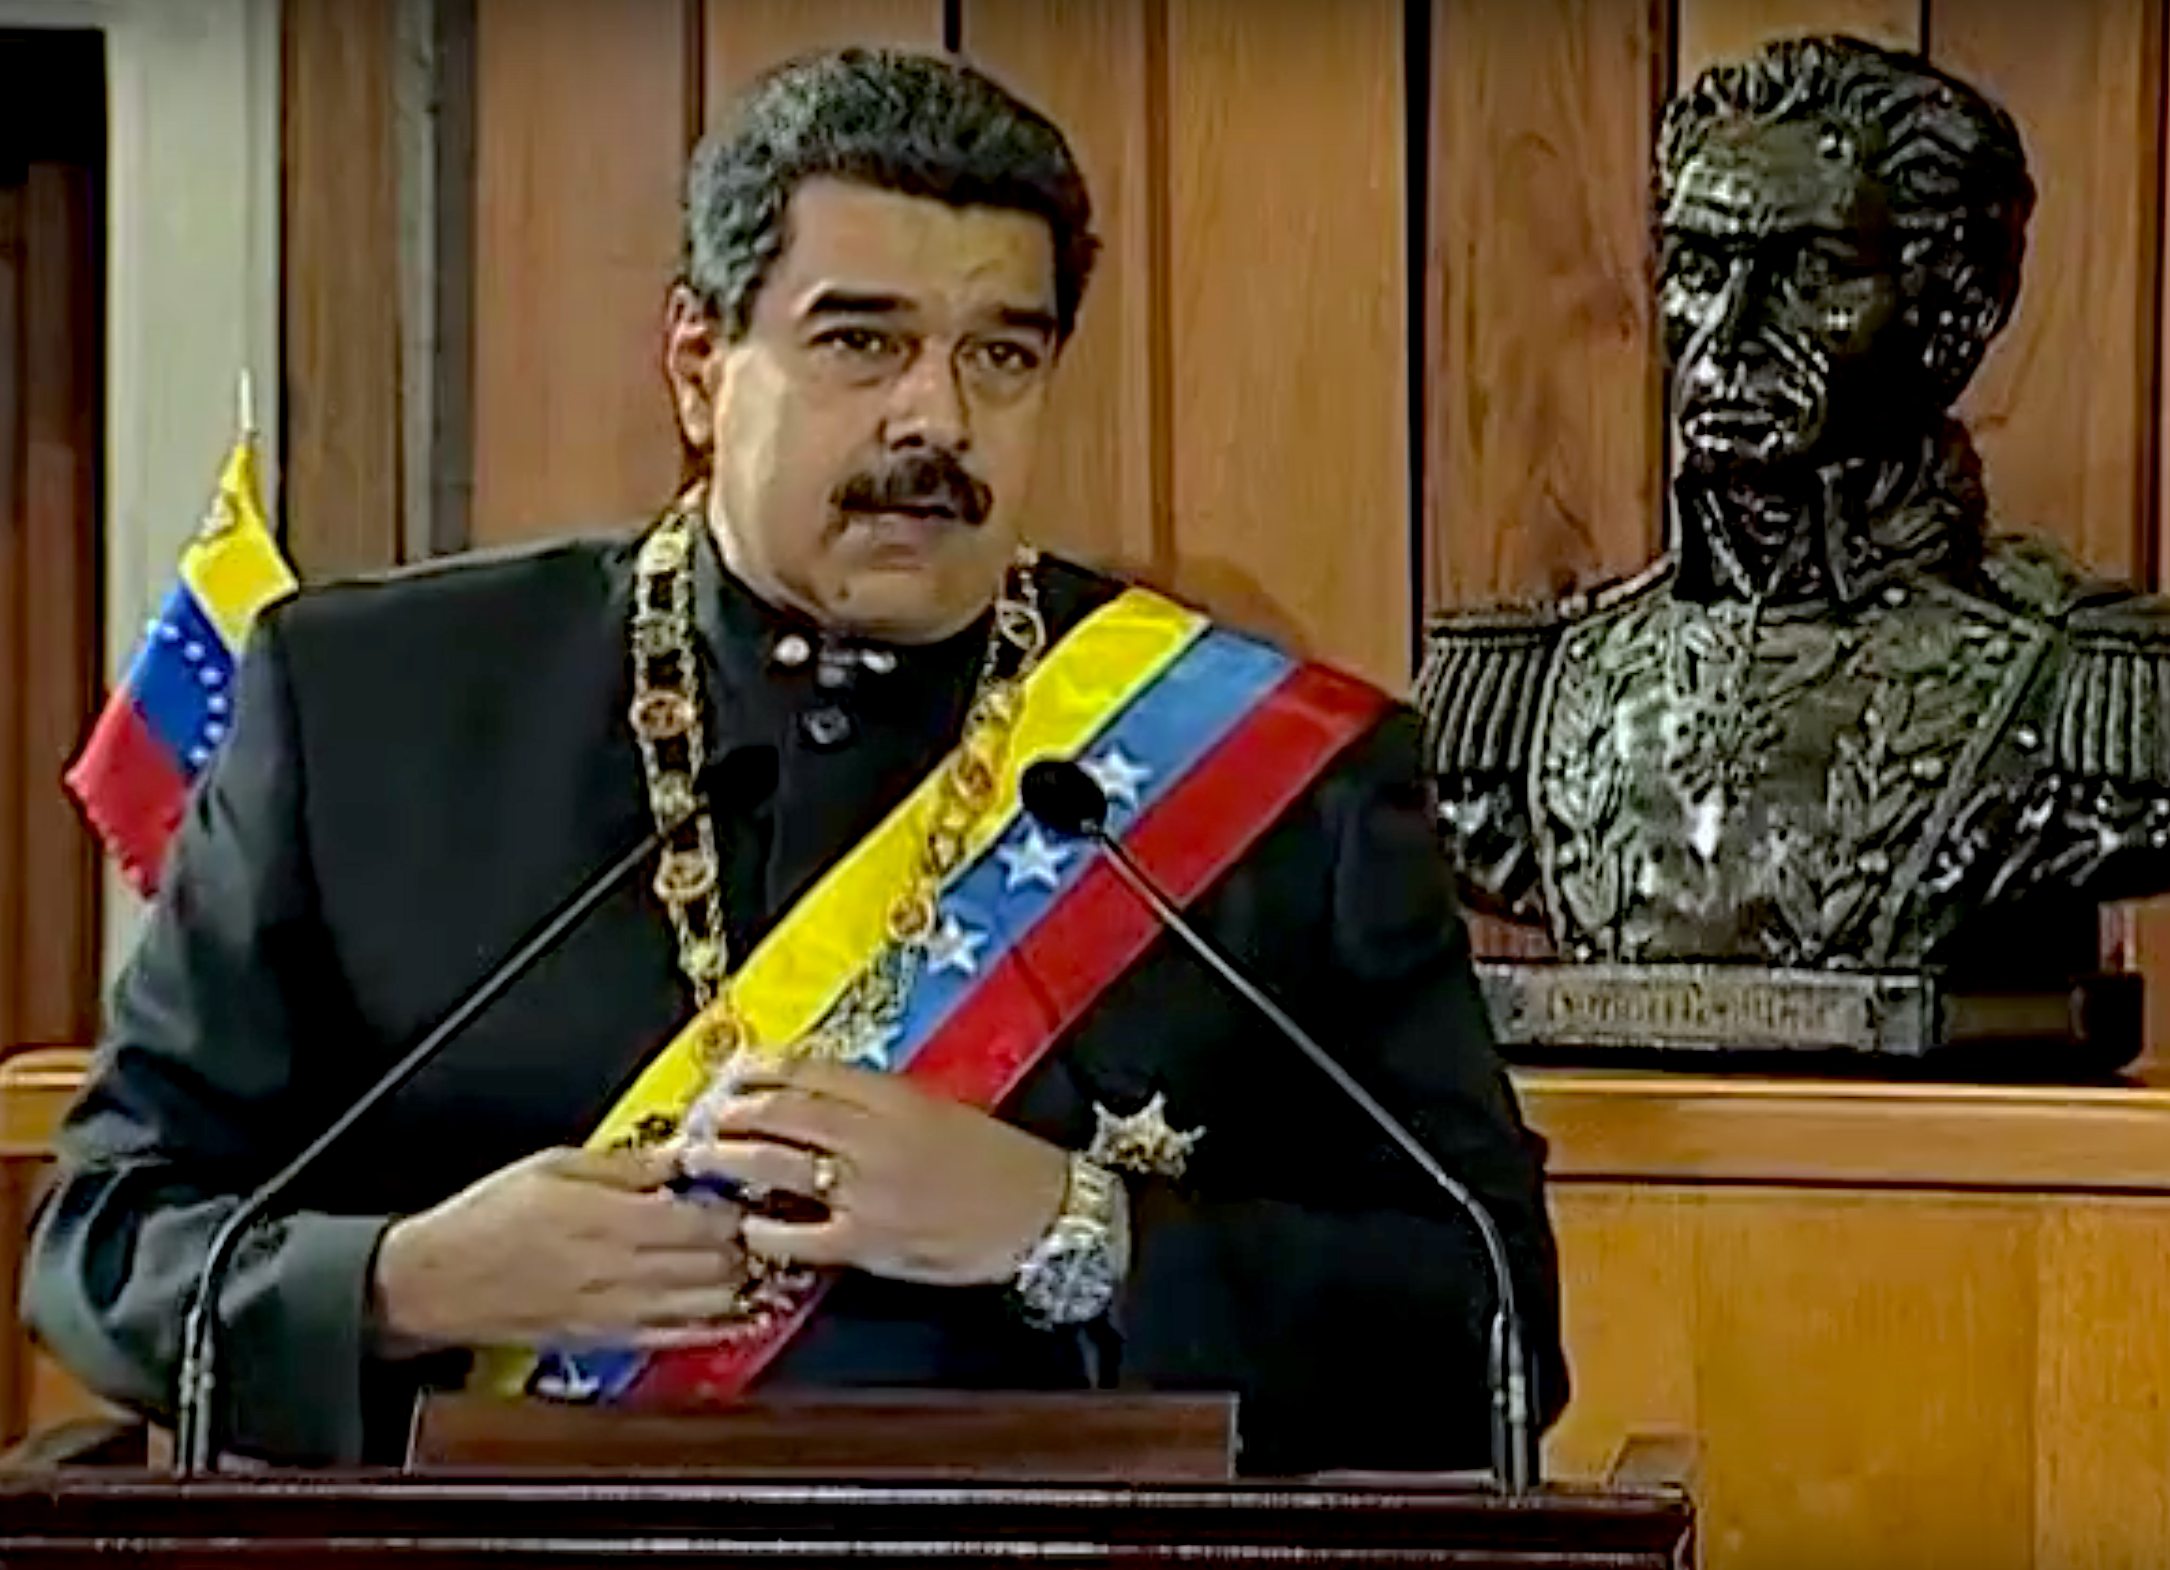 The Inauguration of Nicolas Maduro according to Twitter